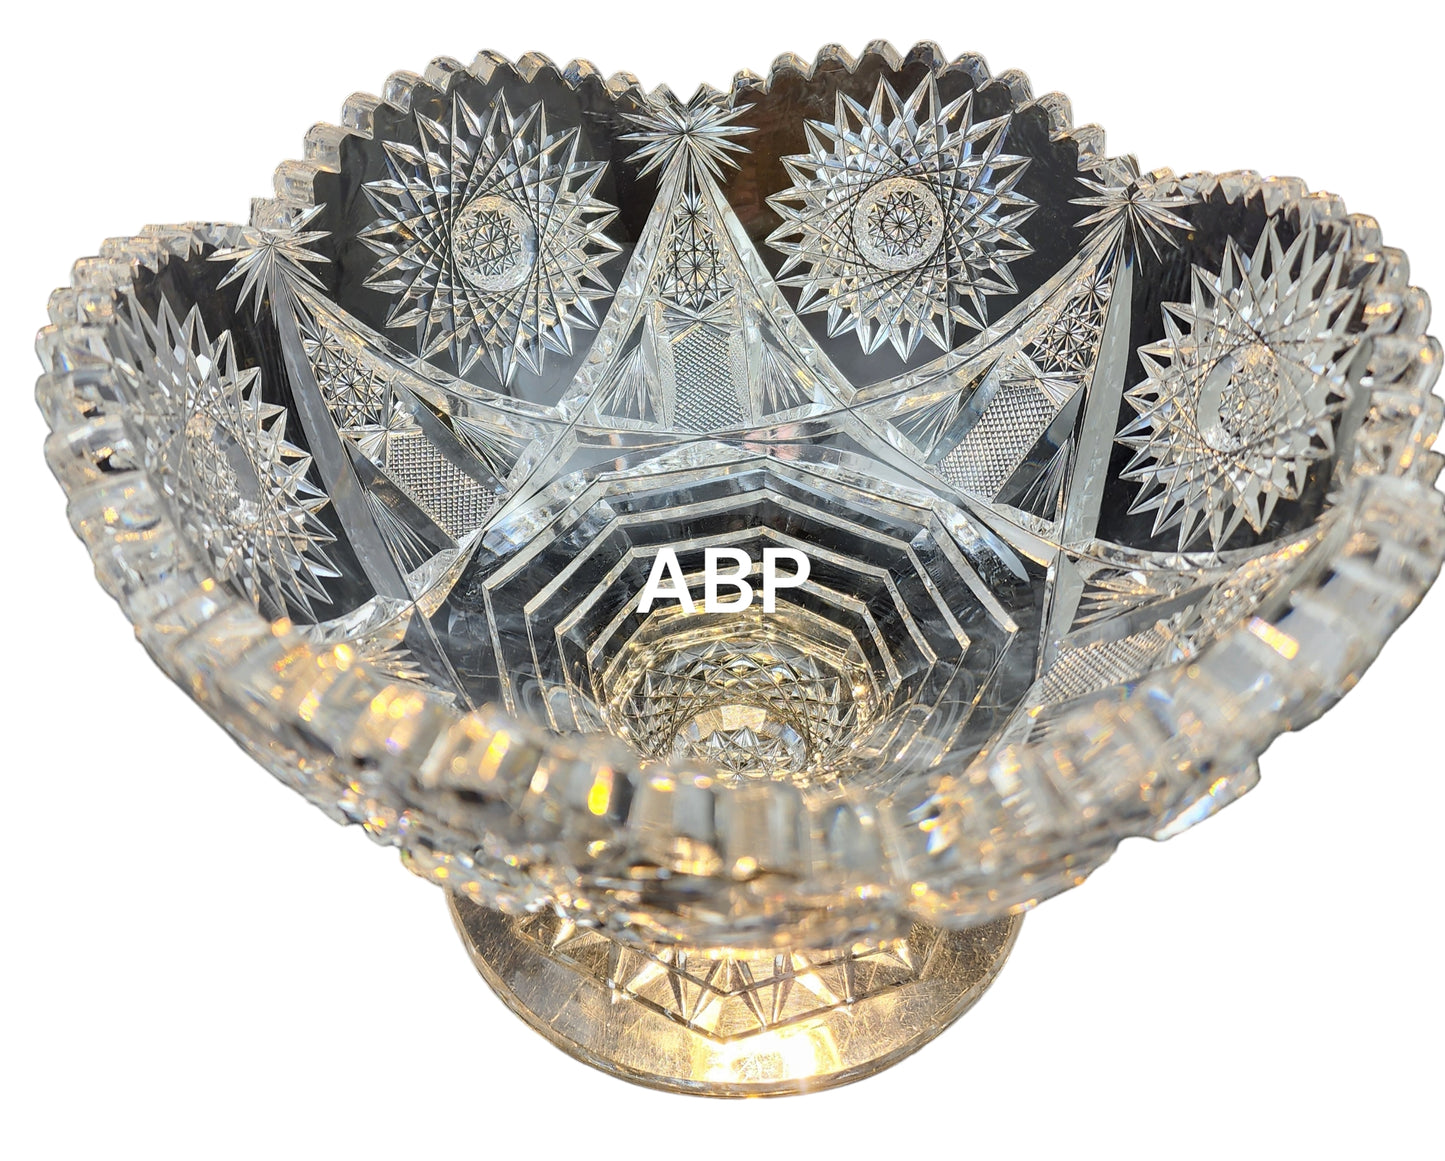 ABP cut glass pedestal dish